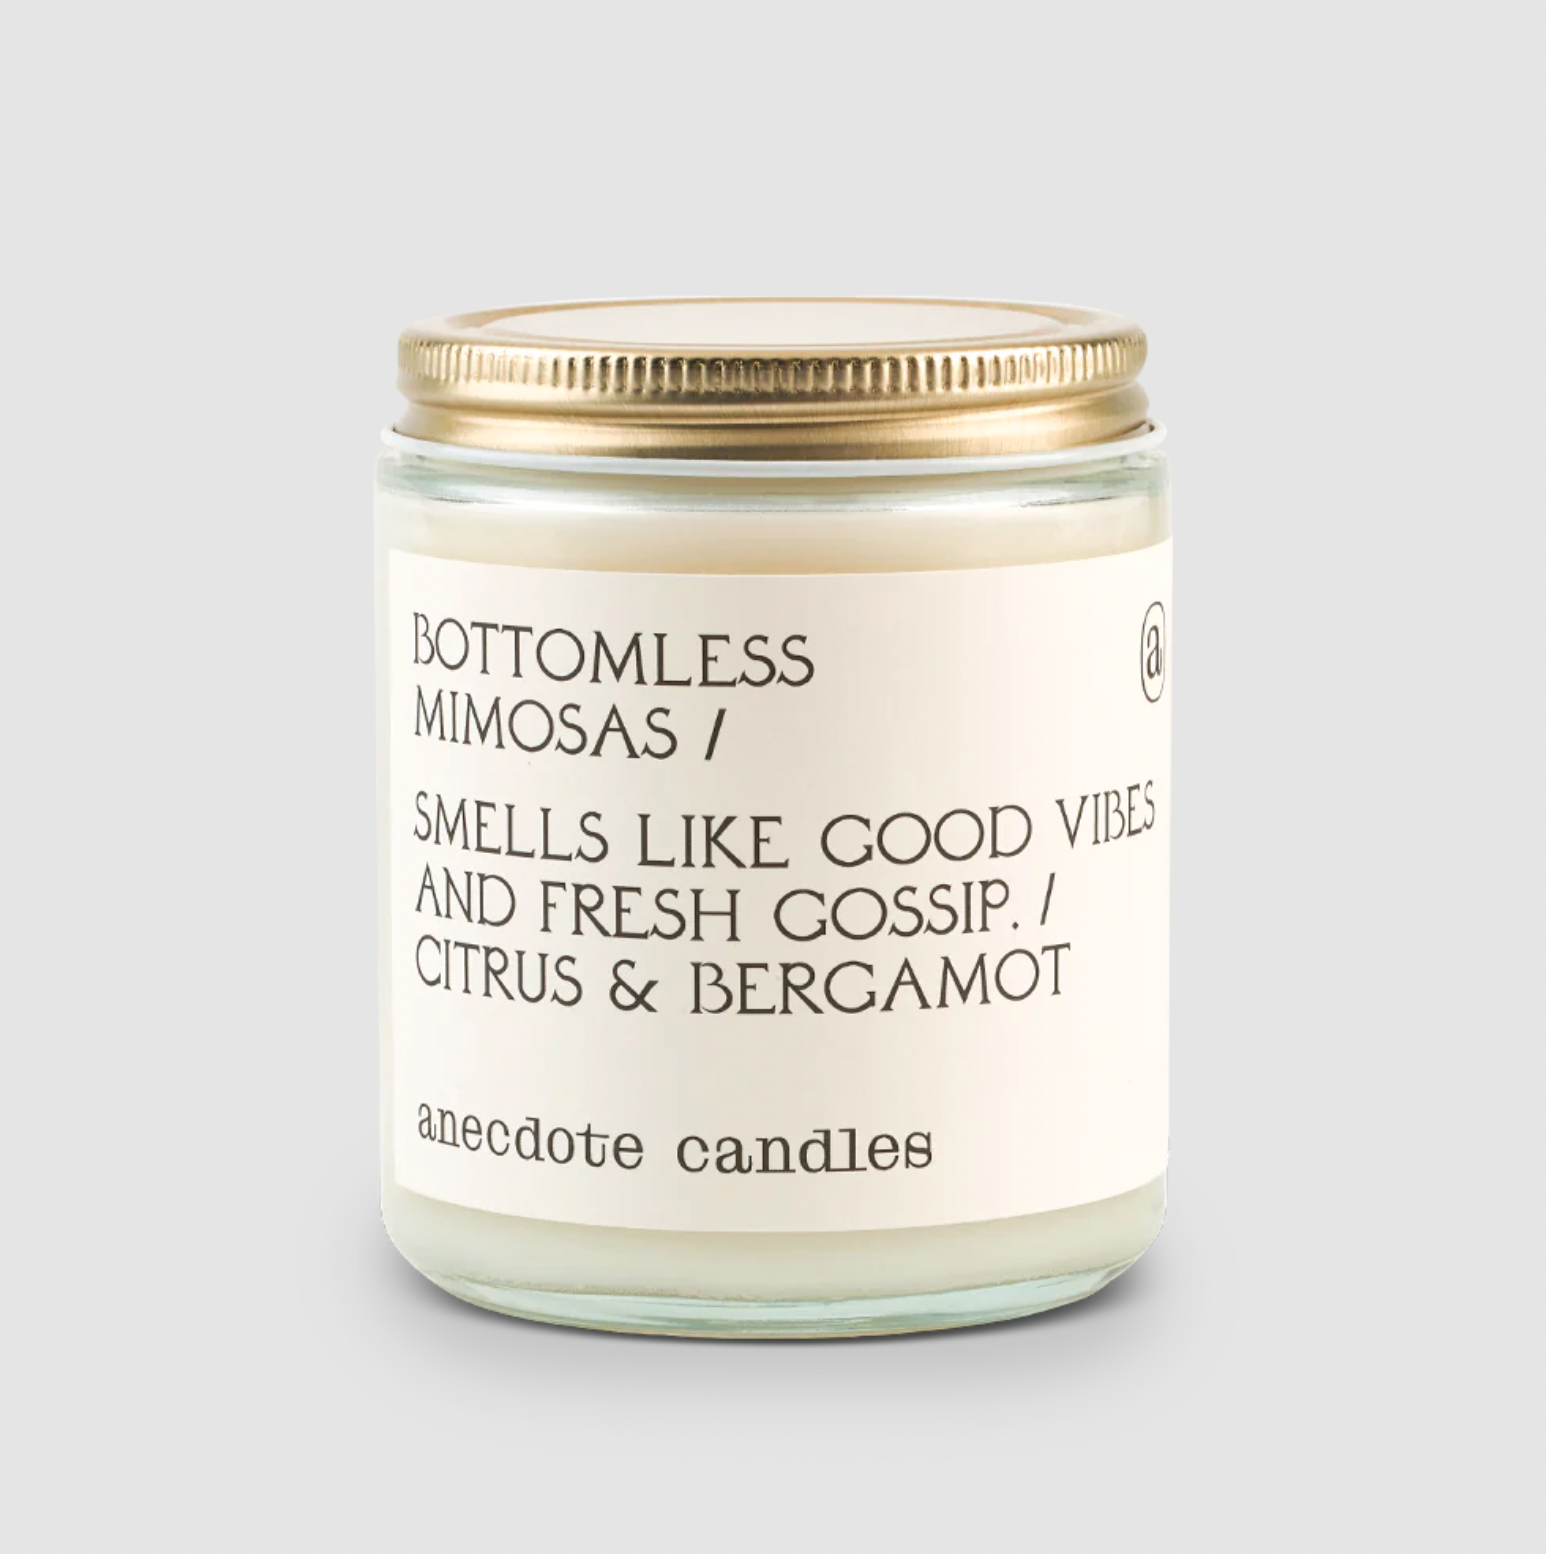 ANECDOTE CANDLES